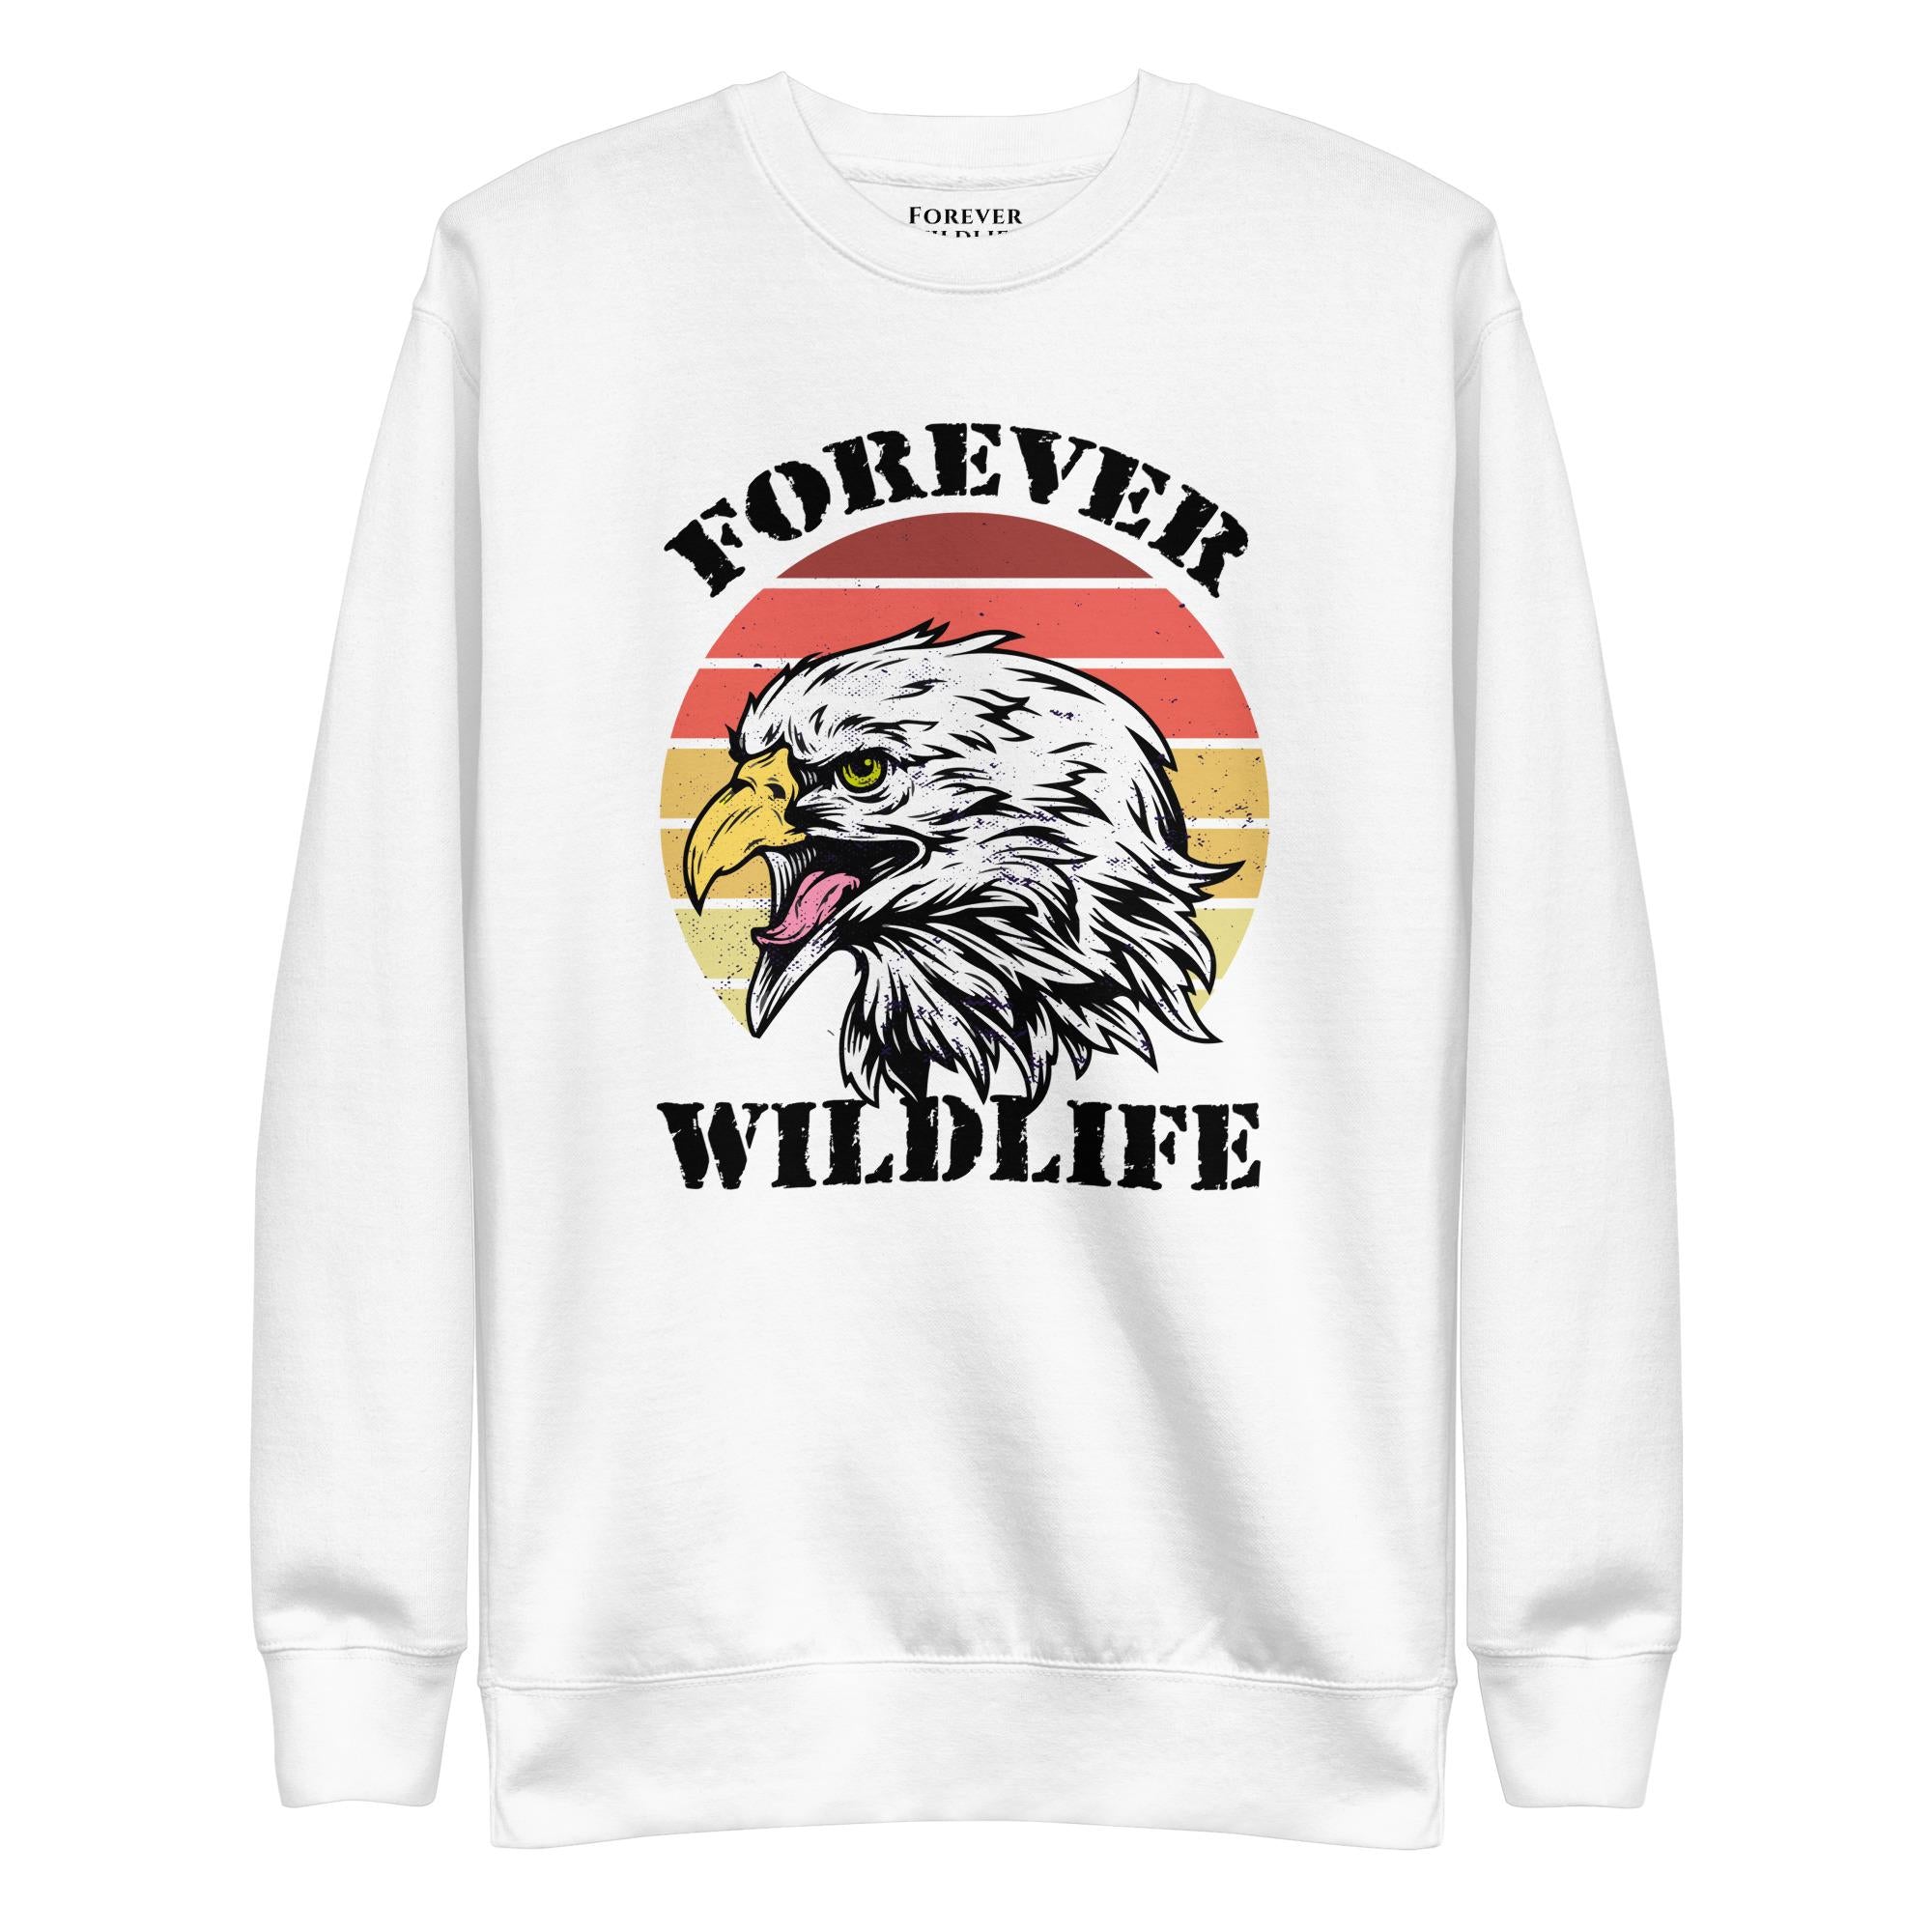 Eagle Sweatshirt in White-Premium Wildlife Animal Inspiration Sweatshirt Design, part of Wildlife Sweatshirts & Clothing from Forever Wildlife.